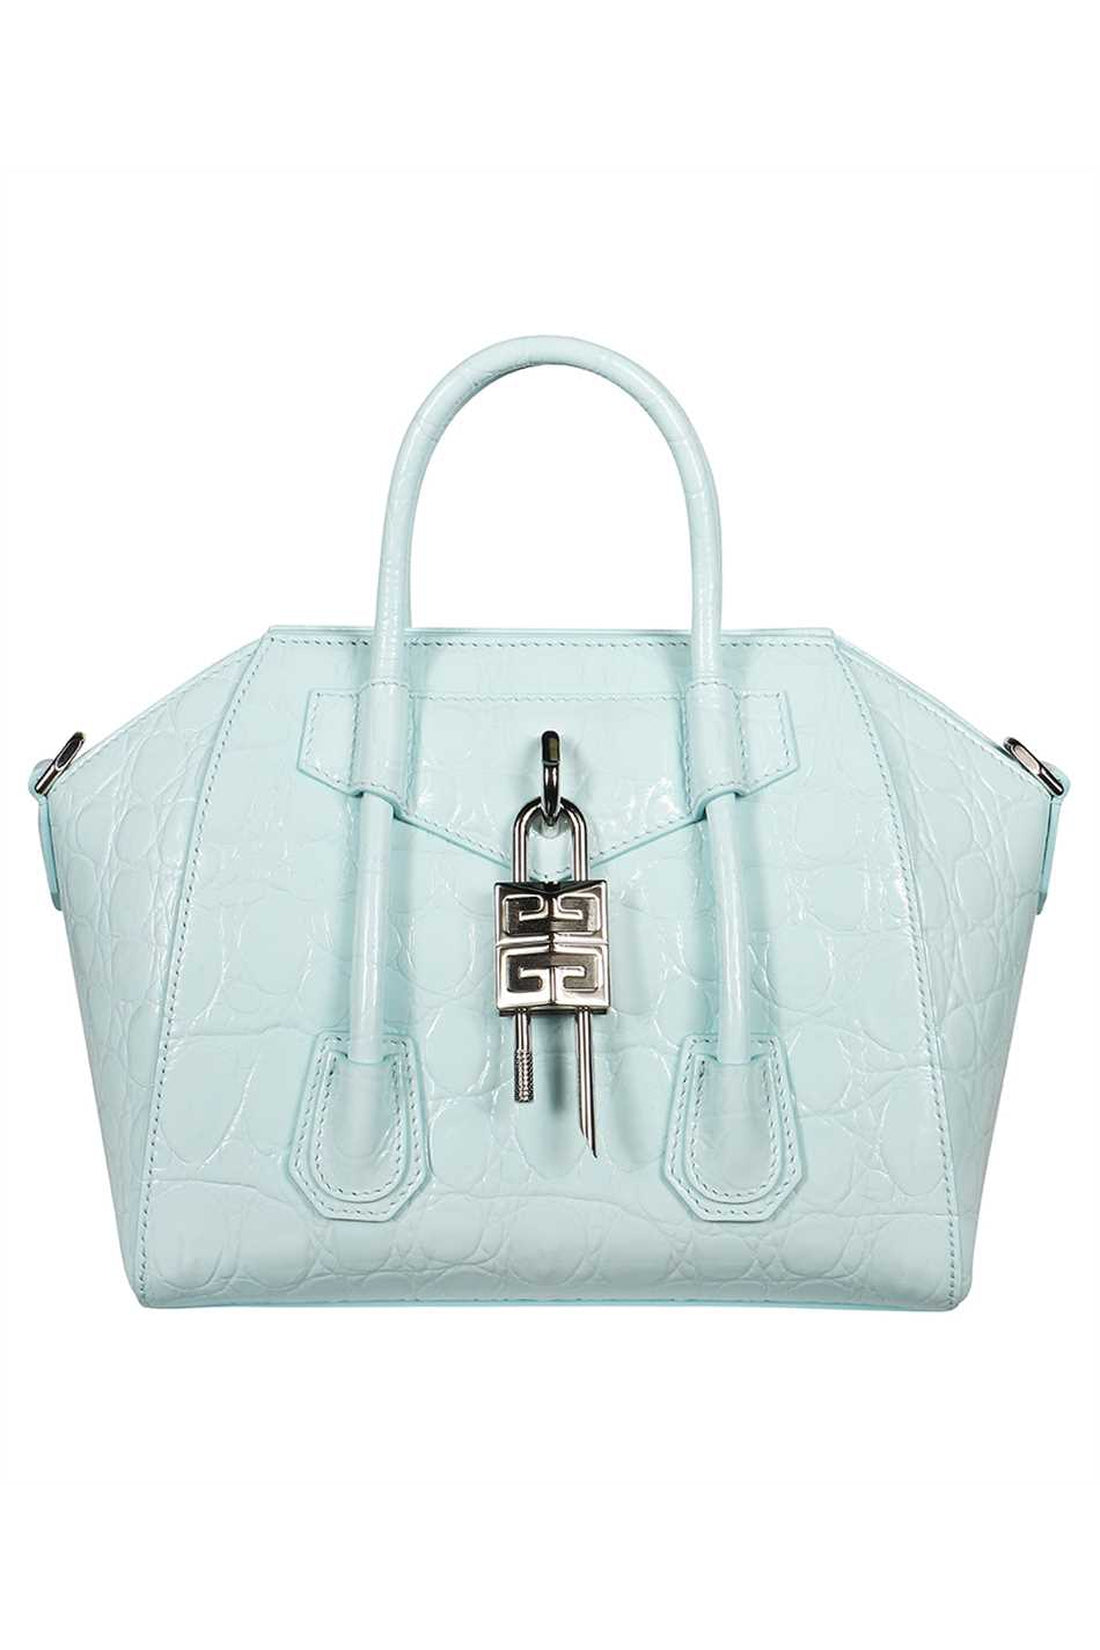 Givenchy-OUTLET-SALE-Mini Antigona Lock leather handbag-ARCHIVIST